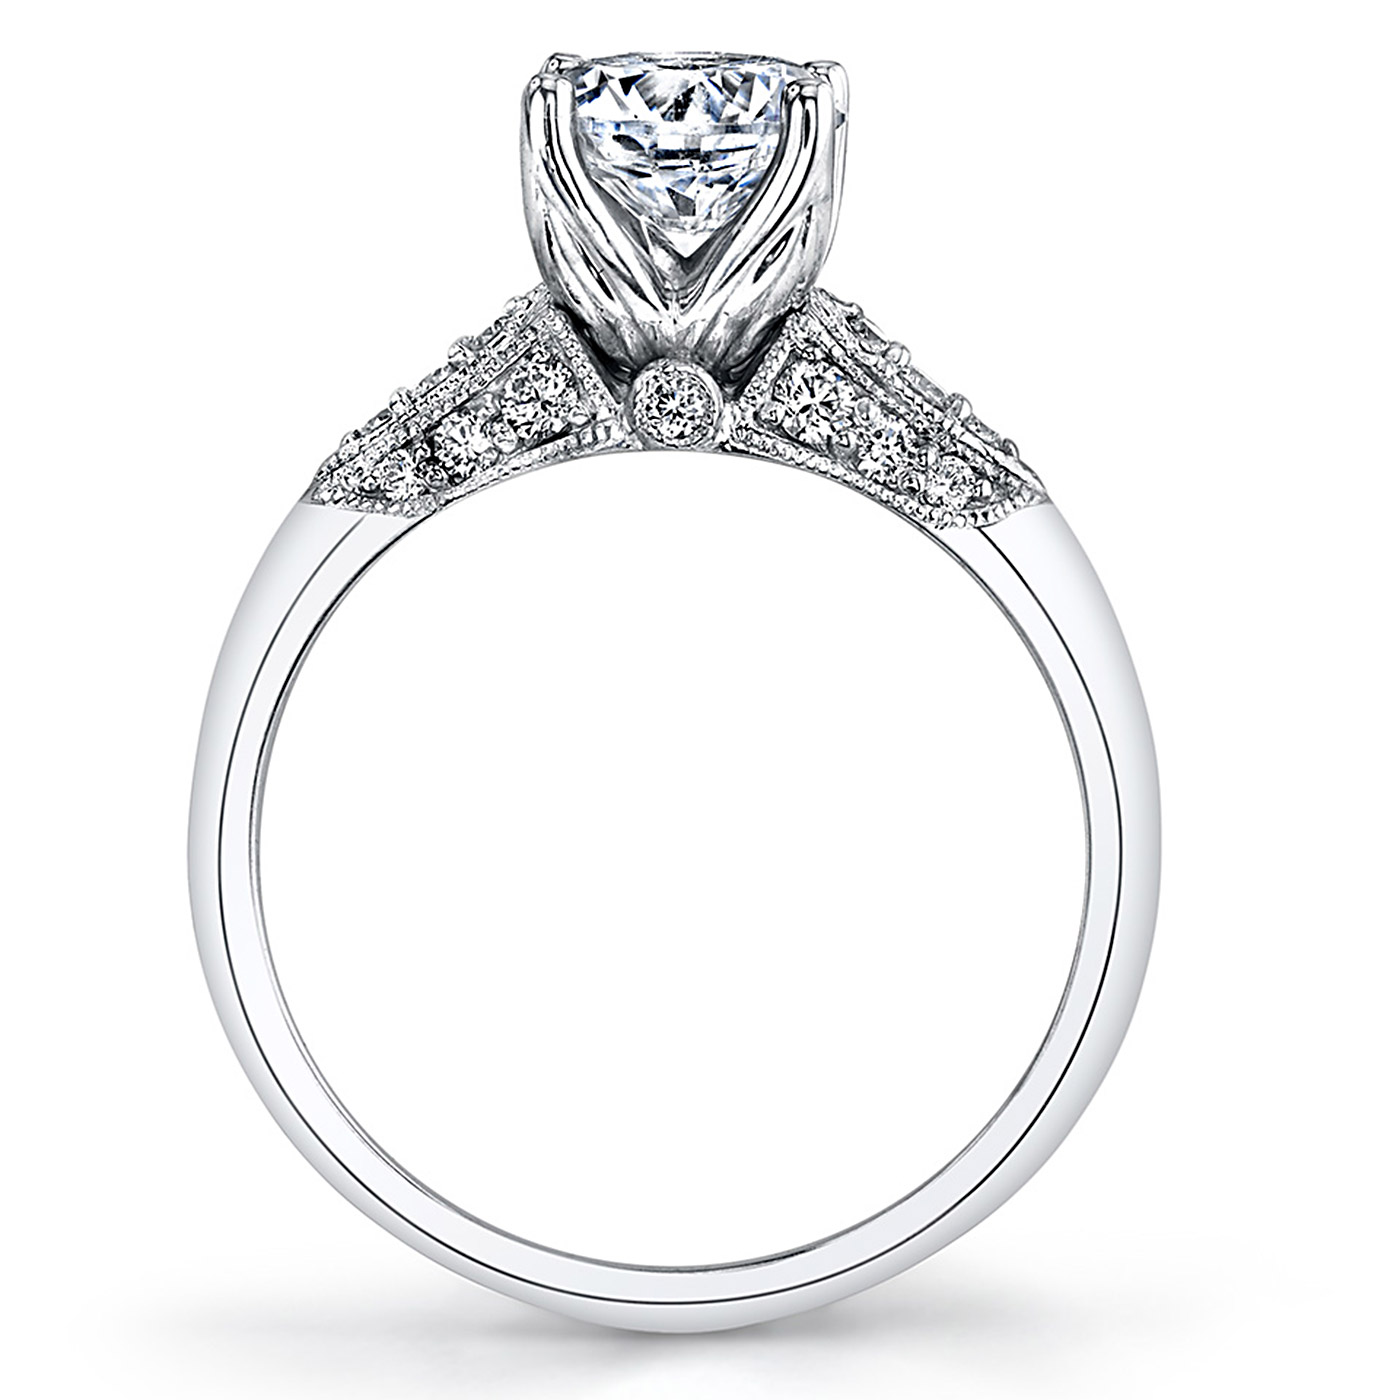 Parade Hera Bridal 14 Karat Diamond Engagement Ring R3942 Alternative View 1